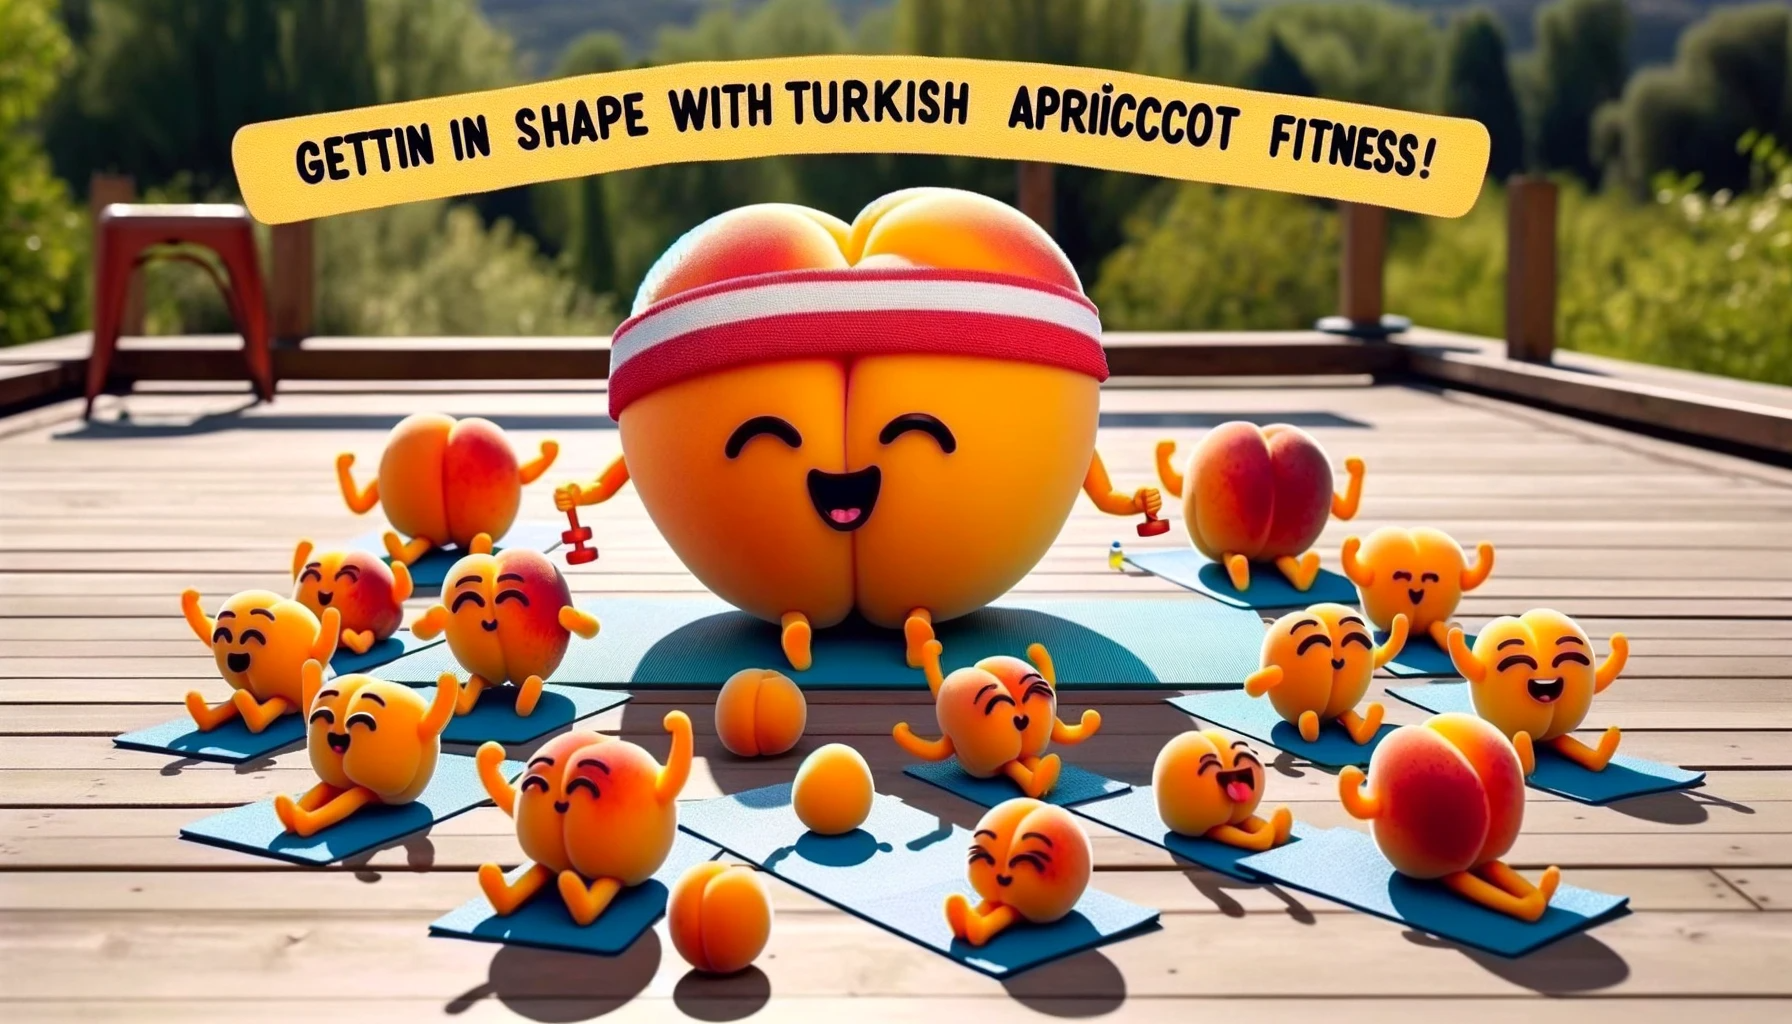 Turkish Apricots: A Nutritional Powerhouse